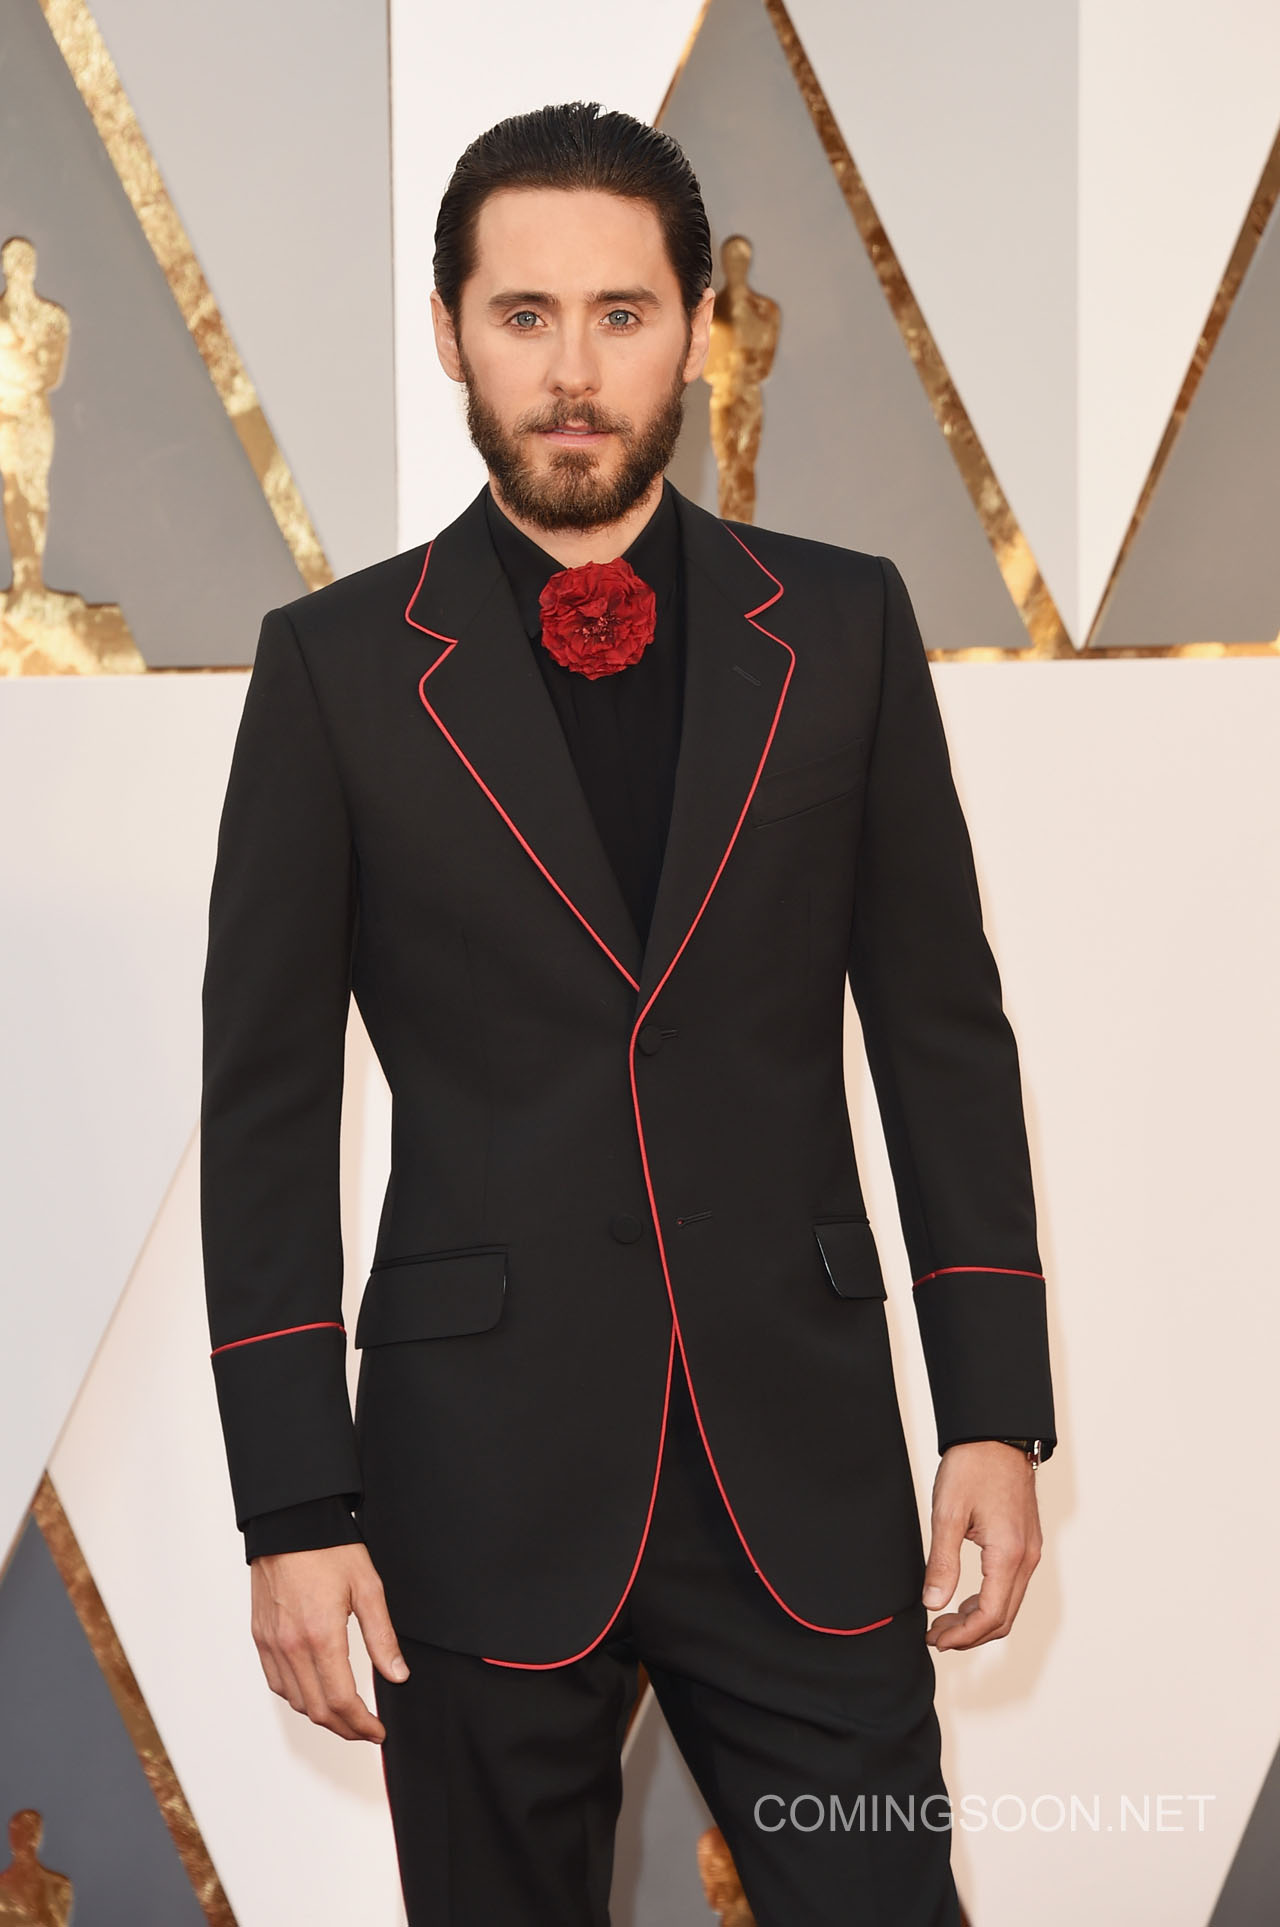 2016 Oscars Red Carpet